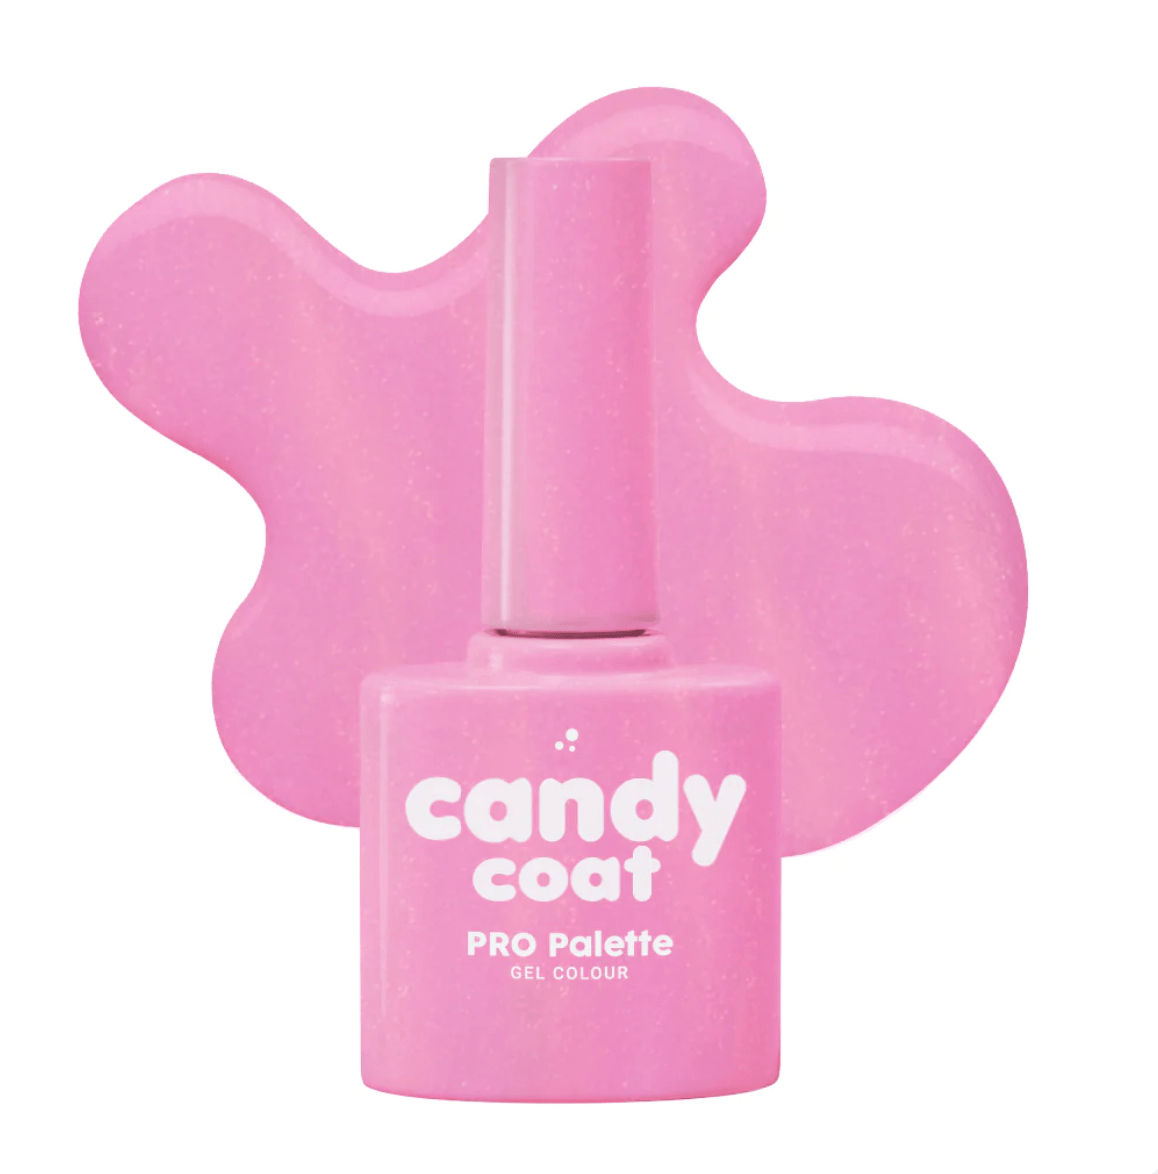 Candy Coat PRO Palette 1232 Helena